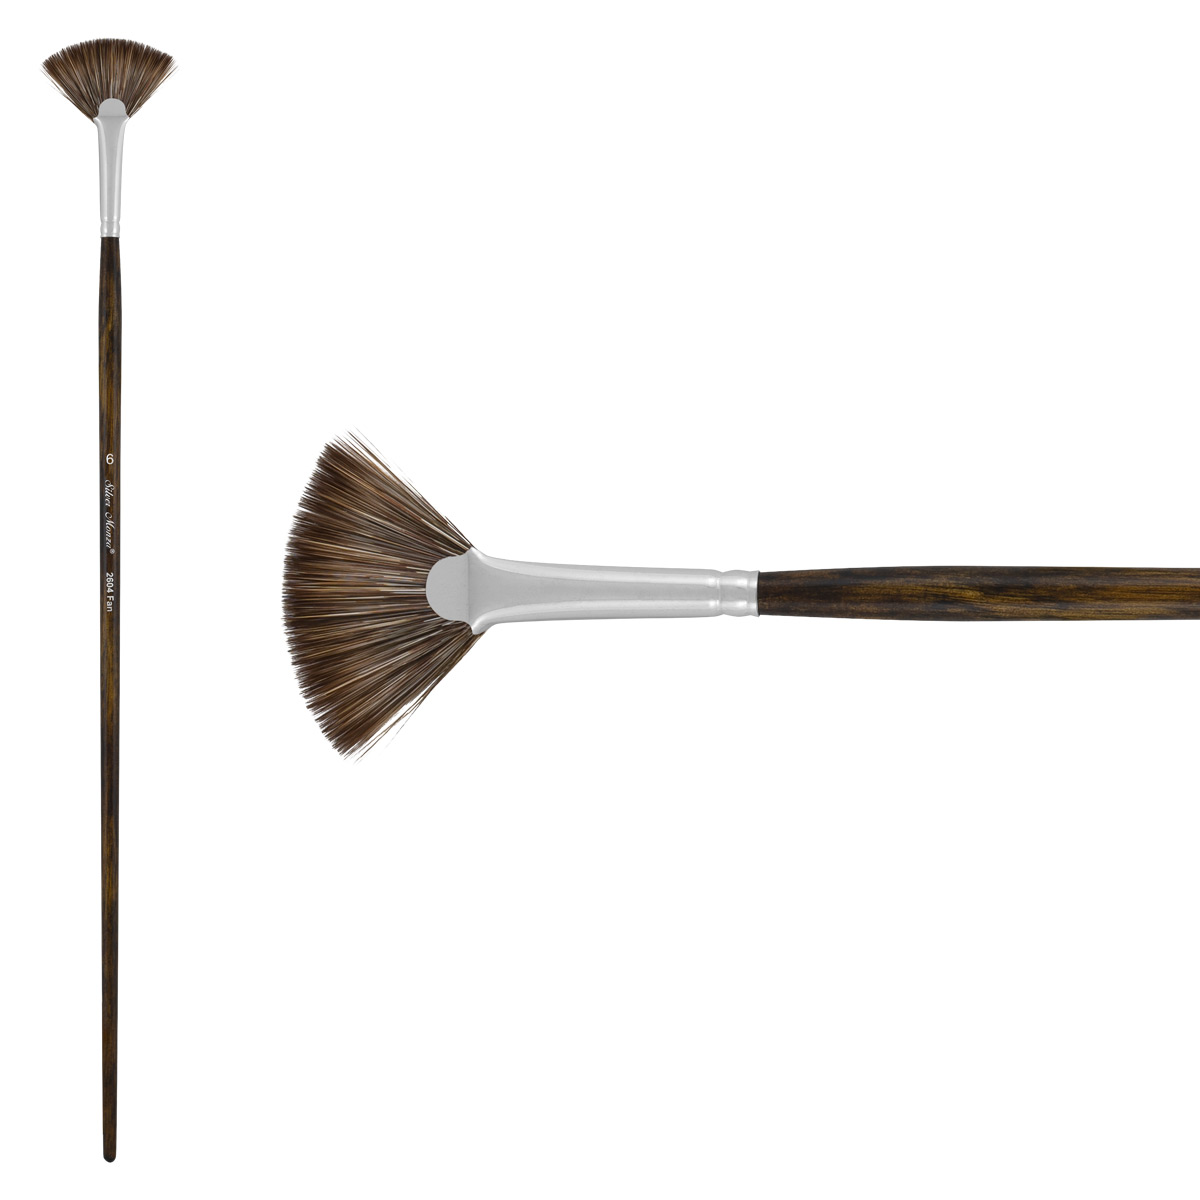 Da Vinci Chuneo Synthetic Hog Bristle Brushes